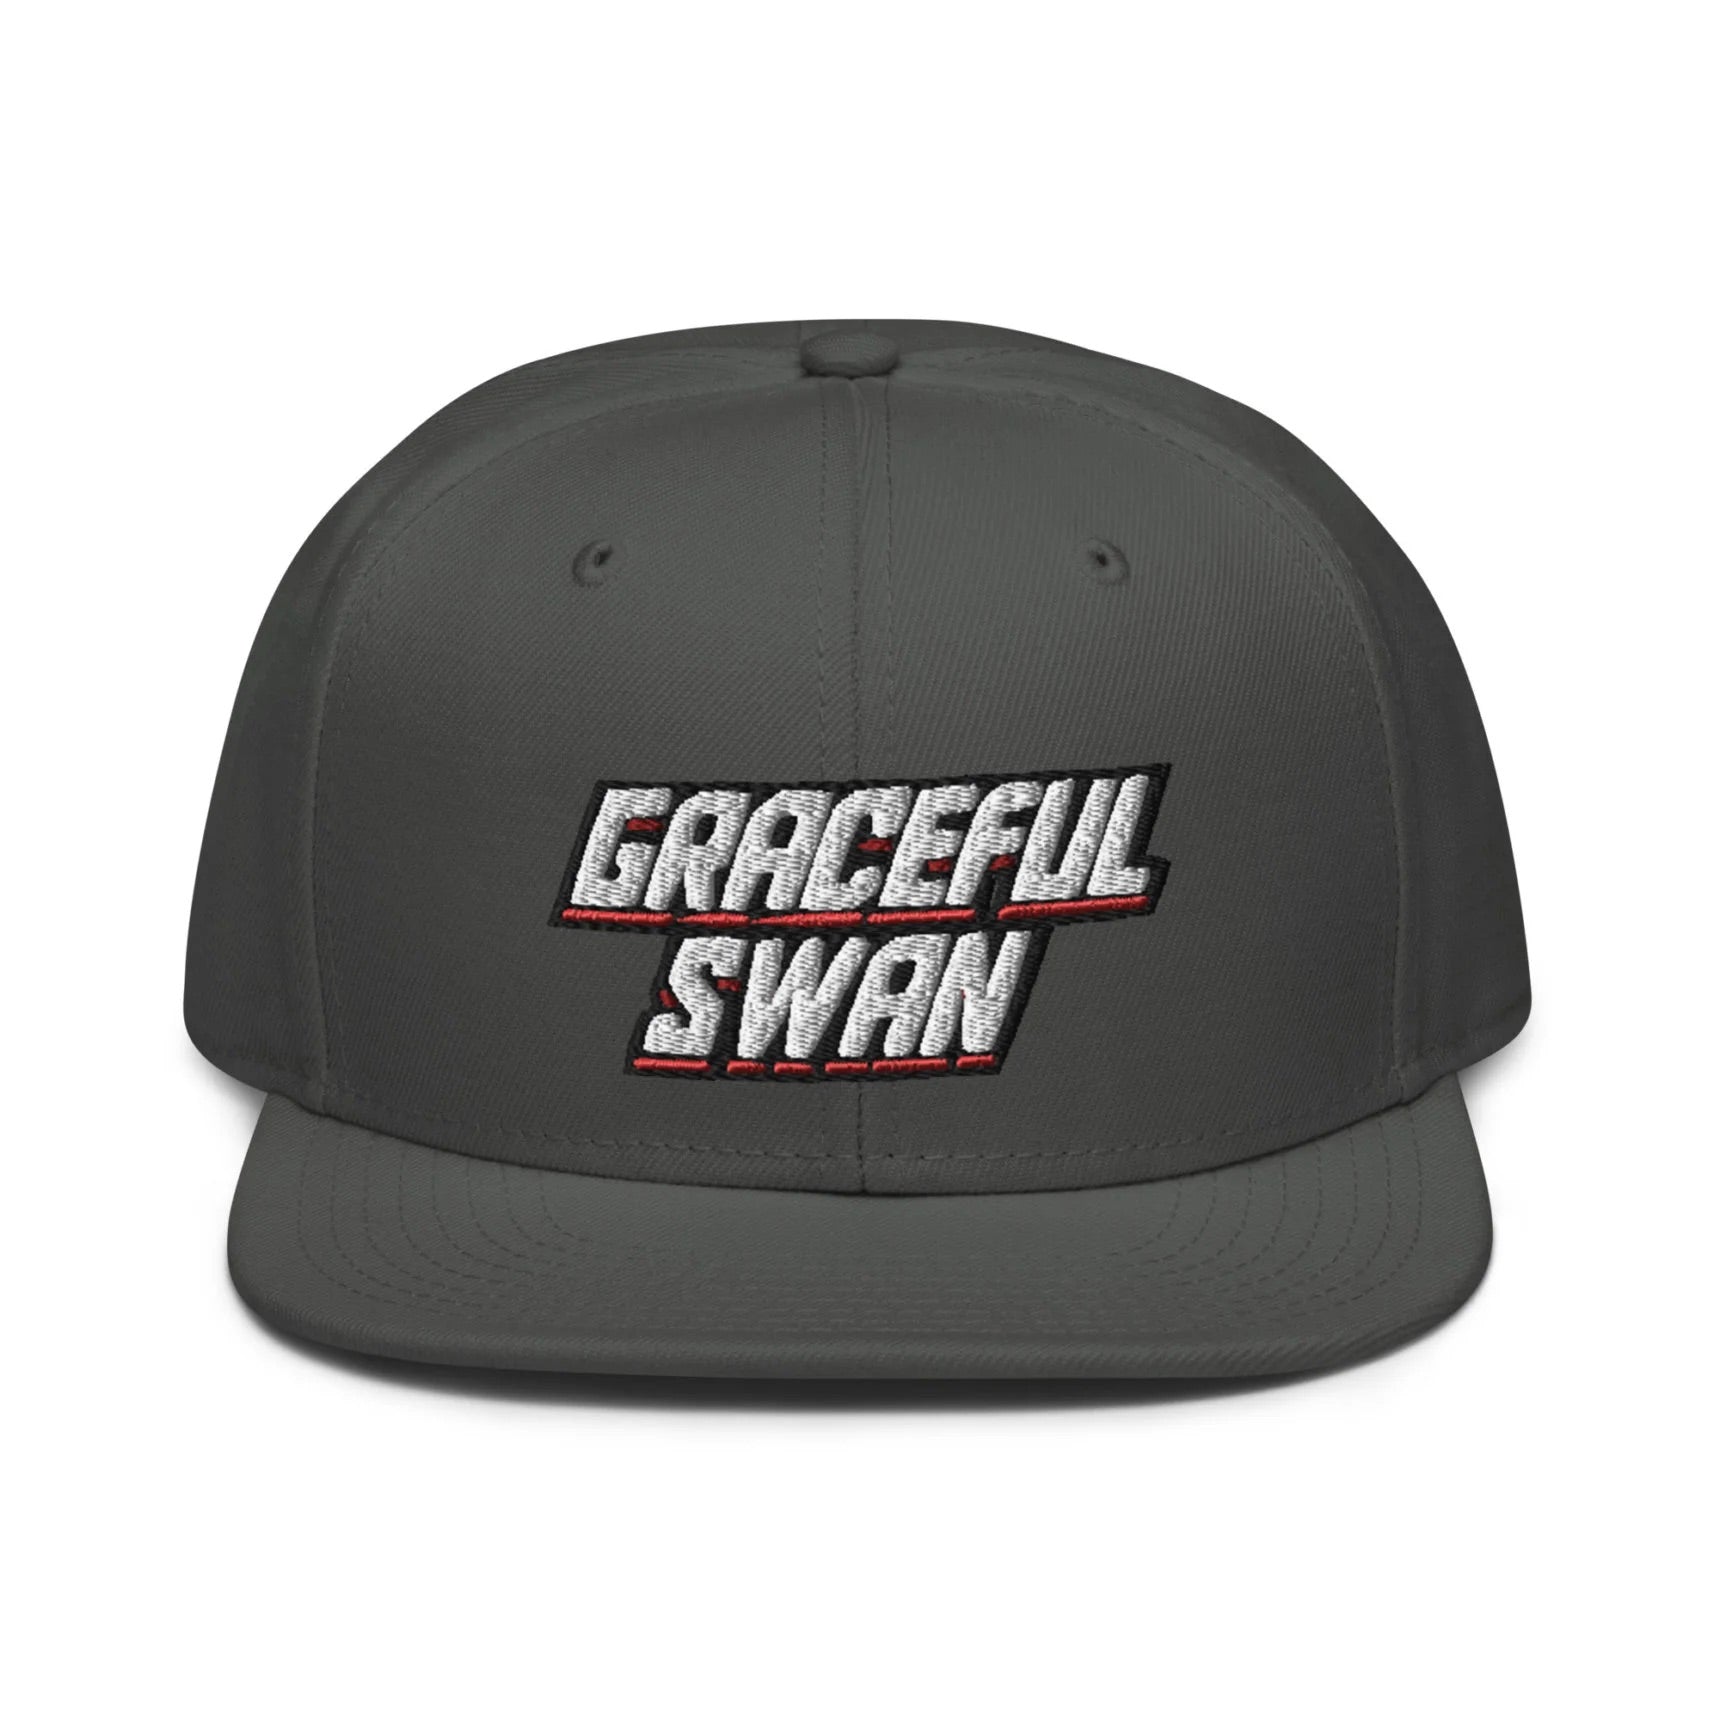 Graceful Swan ShowZone hat in charcoal grey 